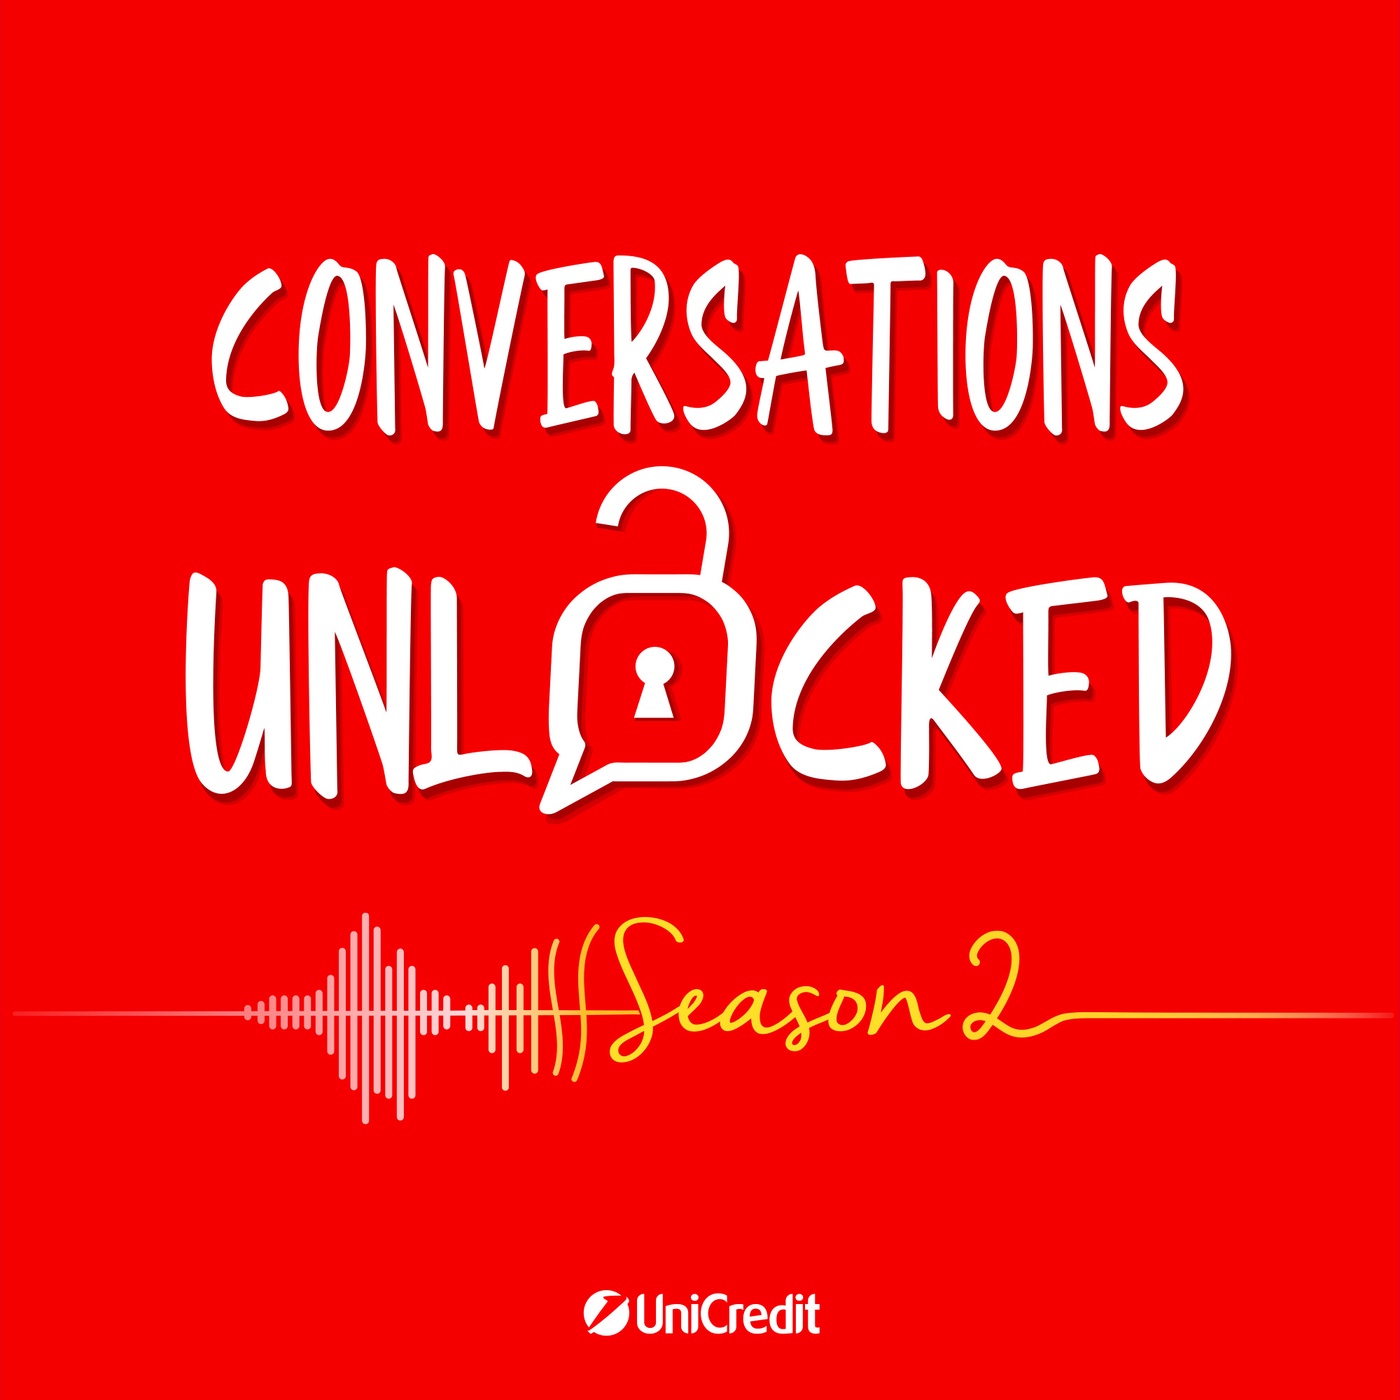 Conversations Unlocked | Season 2